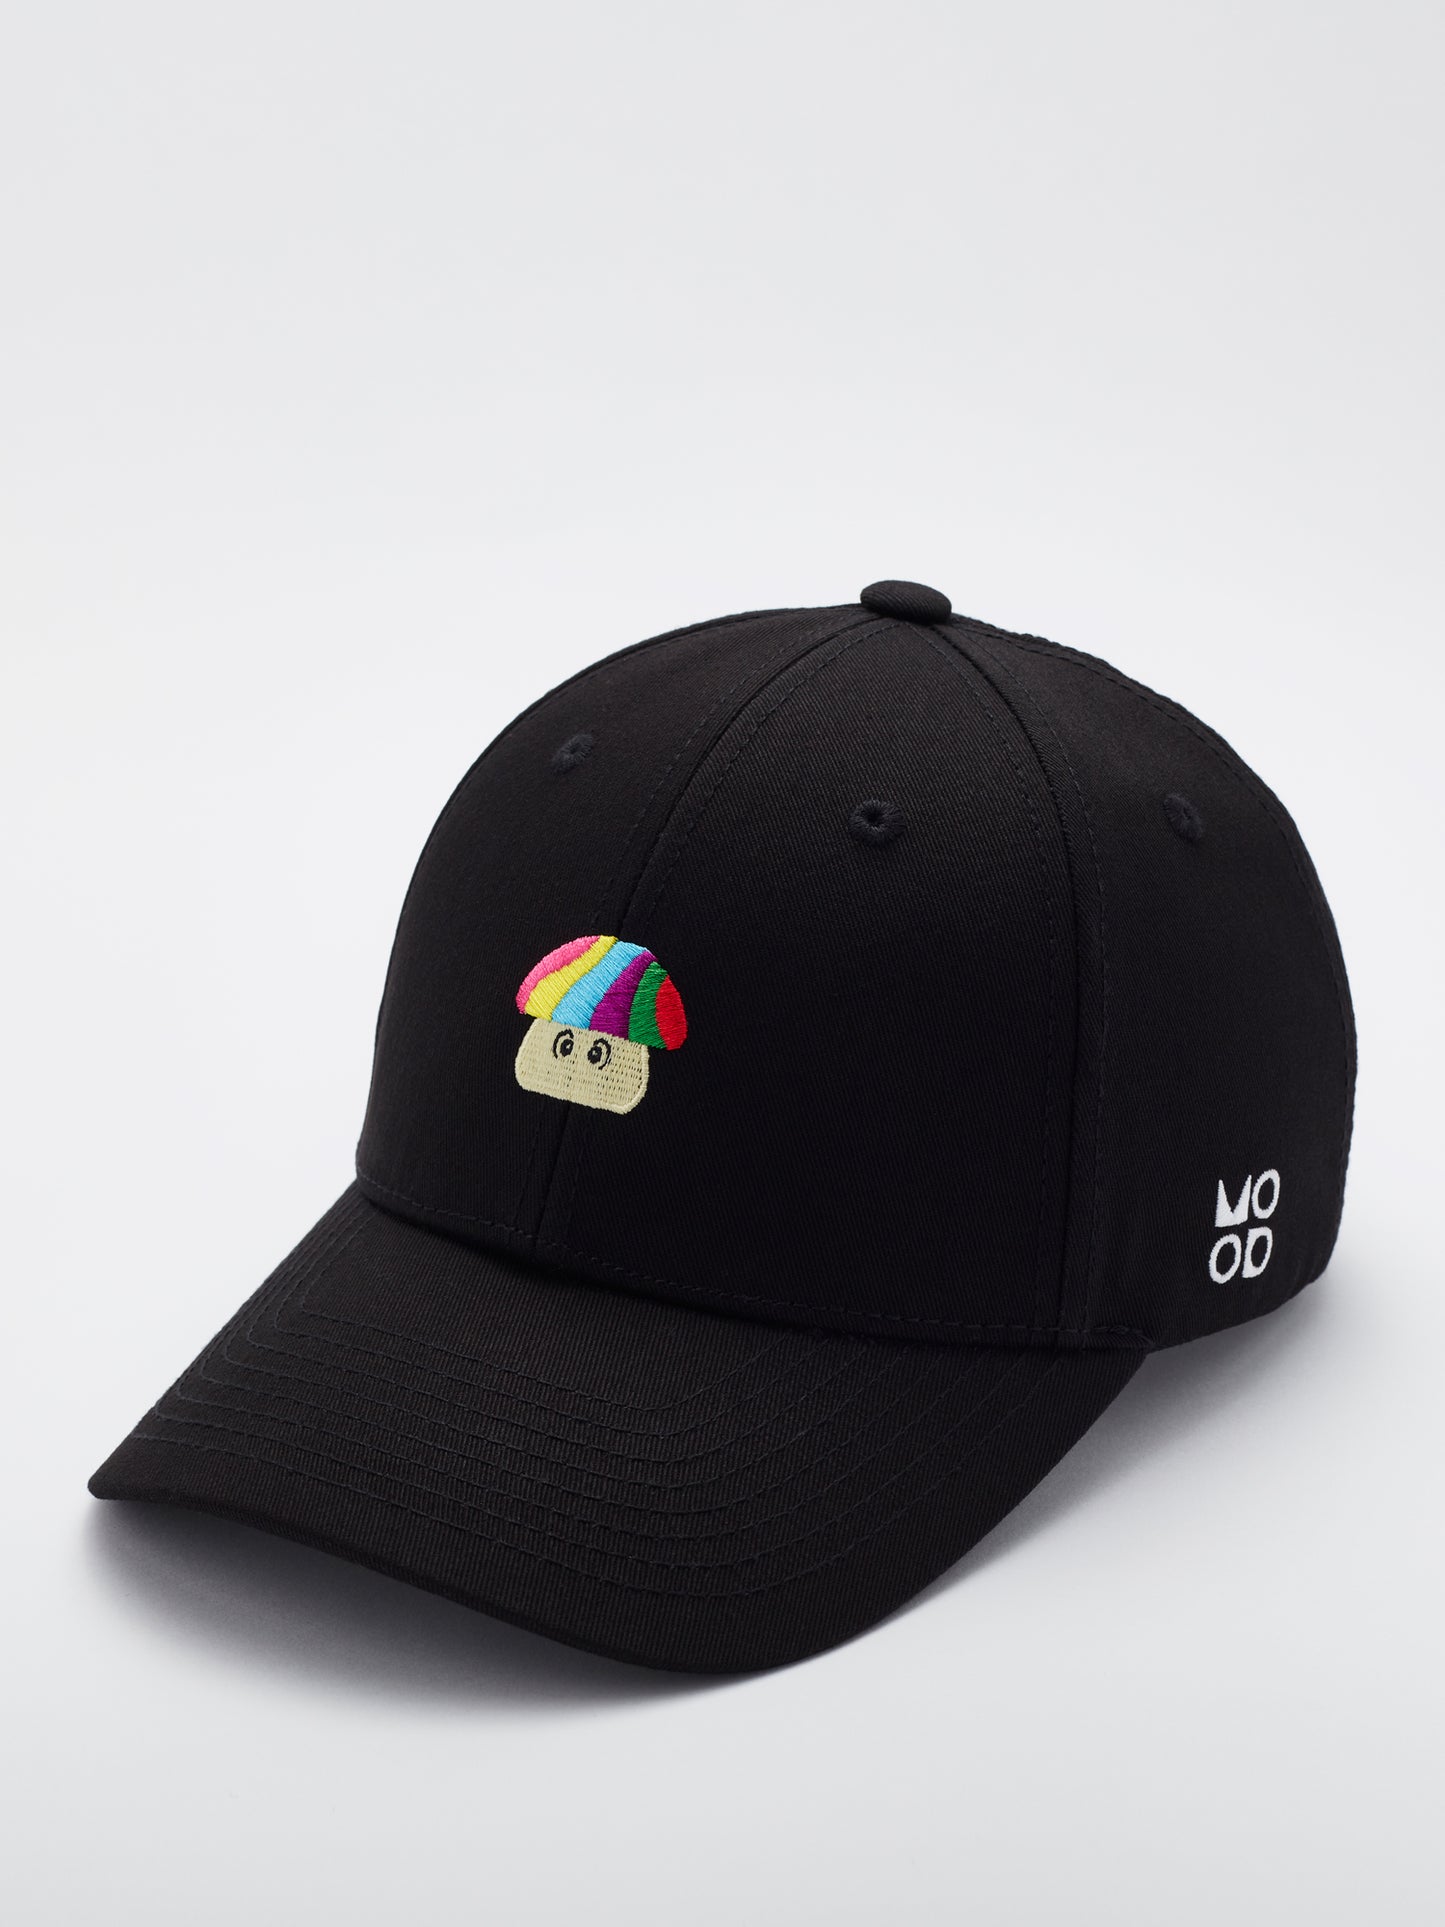 MOOD Shroom baseball cap in black - Side view